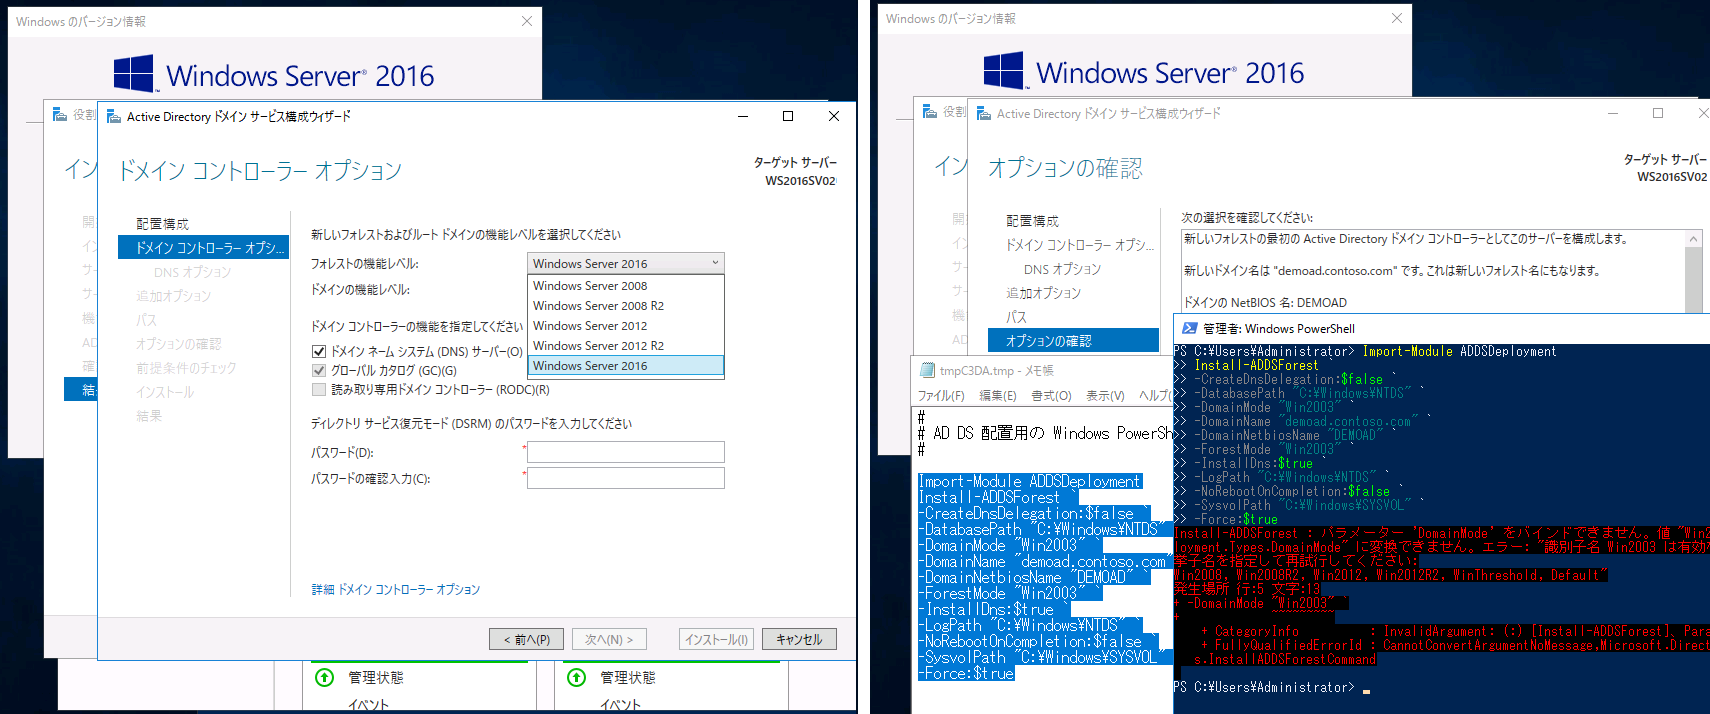 1@Windows Server 2016Active DirectorỹCXg[EBU[hiʍjƁuInstall-ADFSForestvR}hbgiʉEj́AuWindows Server 2003v̋@\x󂯕tȂ